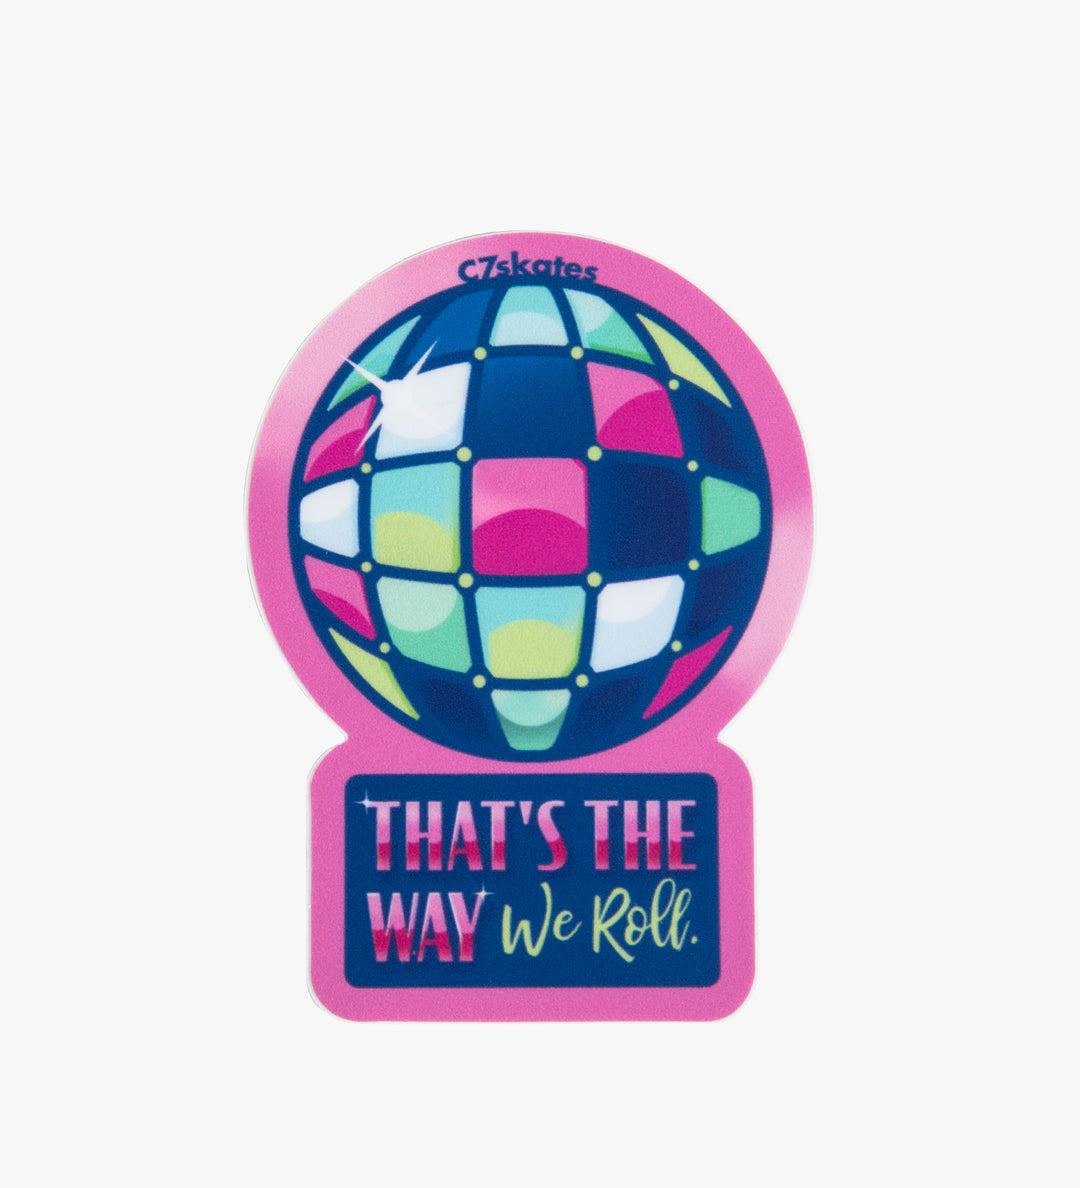 Disco Ball Sticker – C7skates